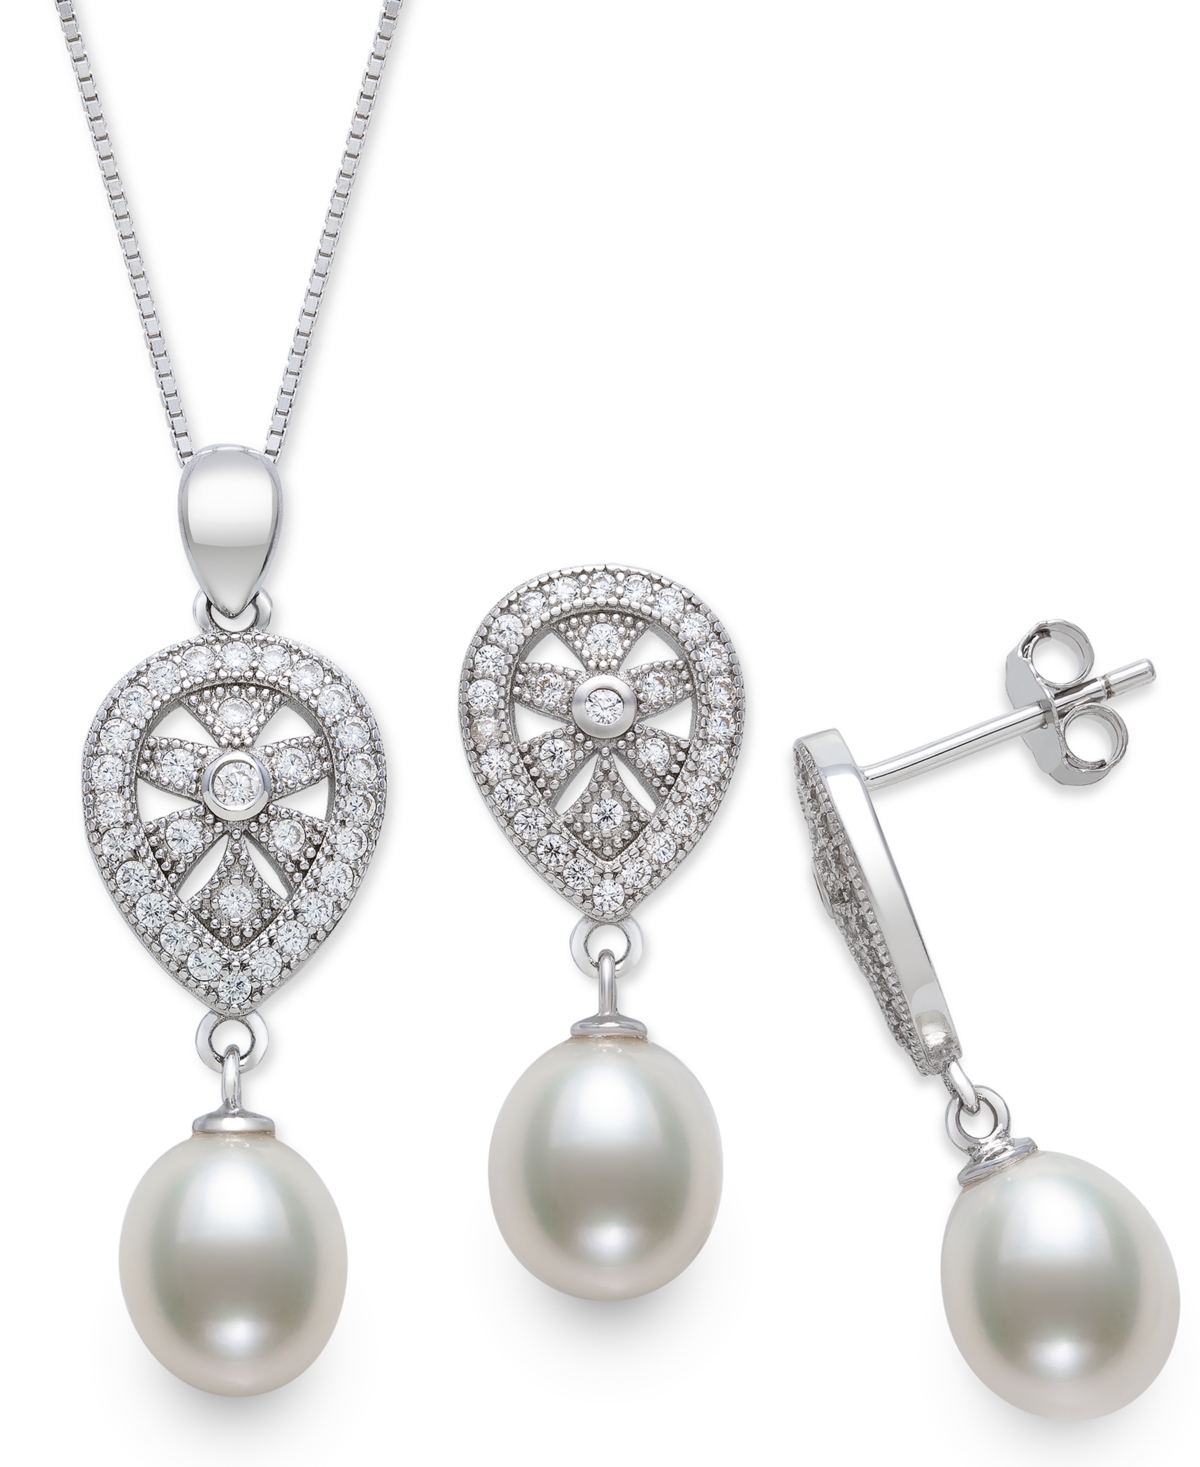 2-Pc. Set Cultured Freshwater Pearl (8mm) & Cubic Zirconia Teardrop Pendant Necklace & Matching Drop Earrings in Sterling Silver - Sterli